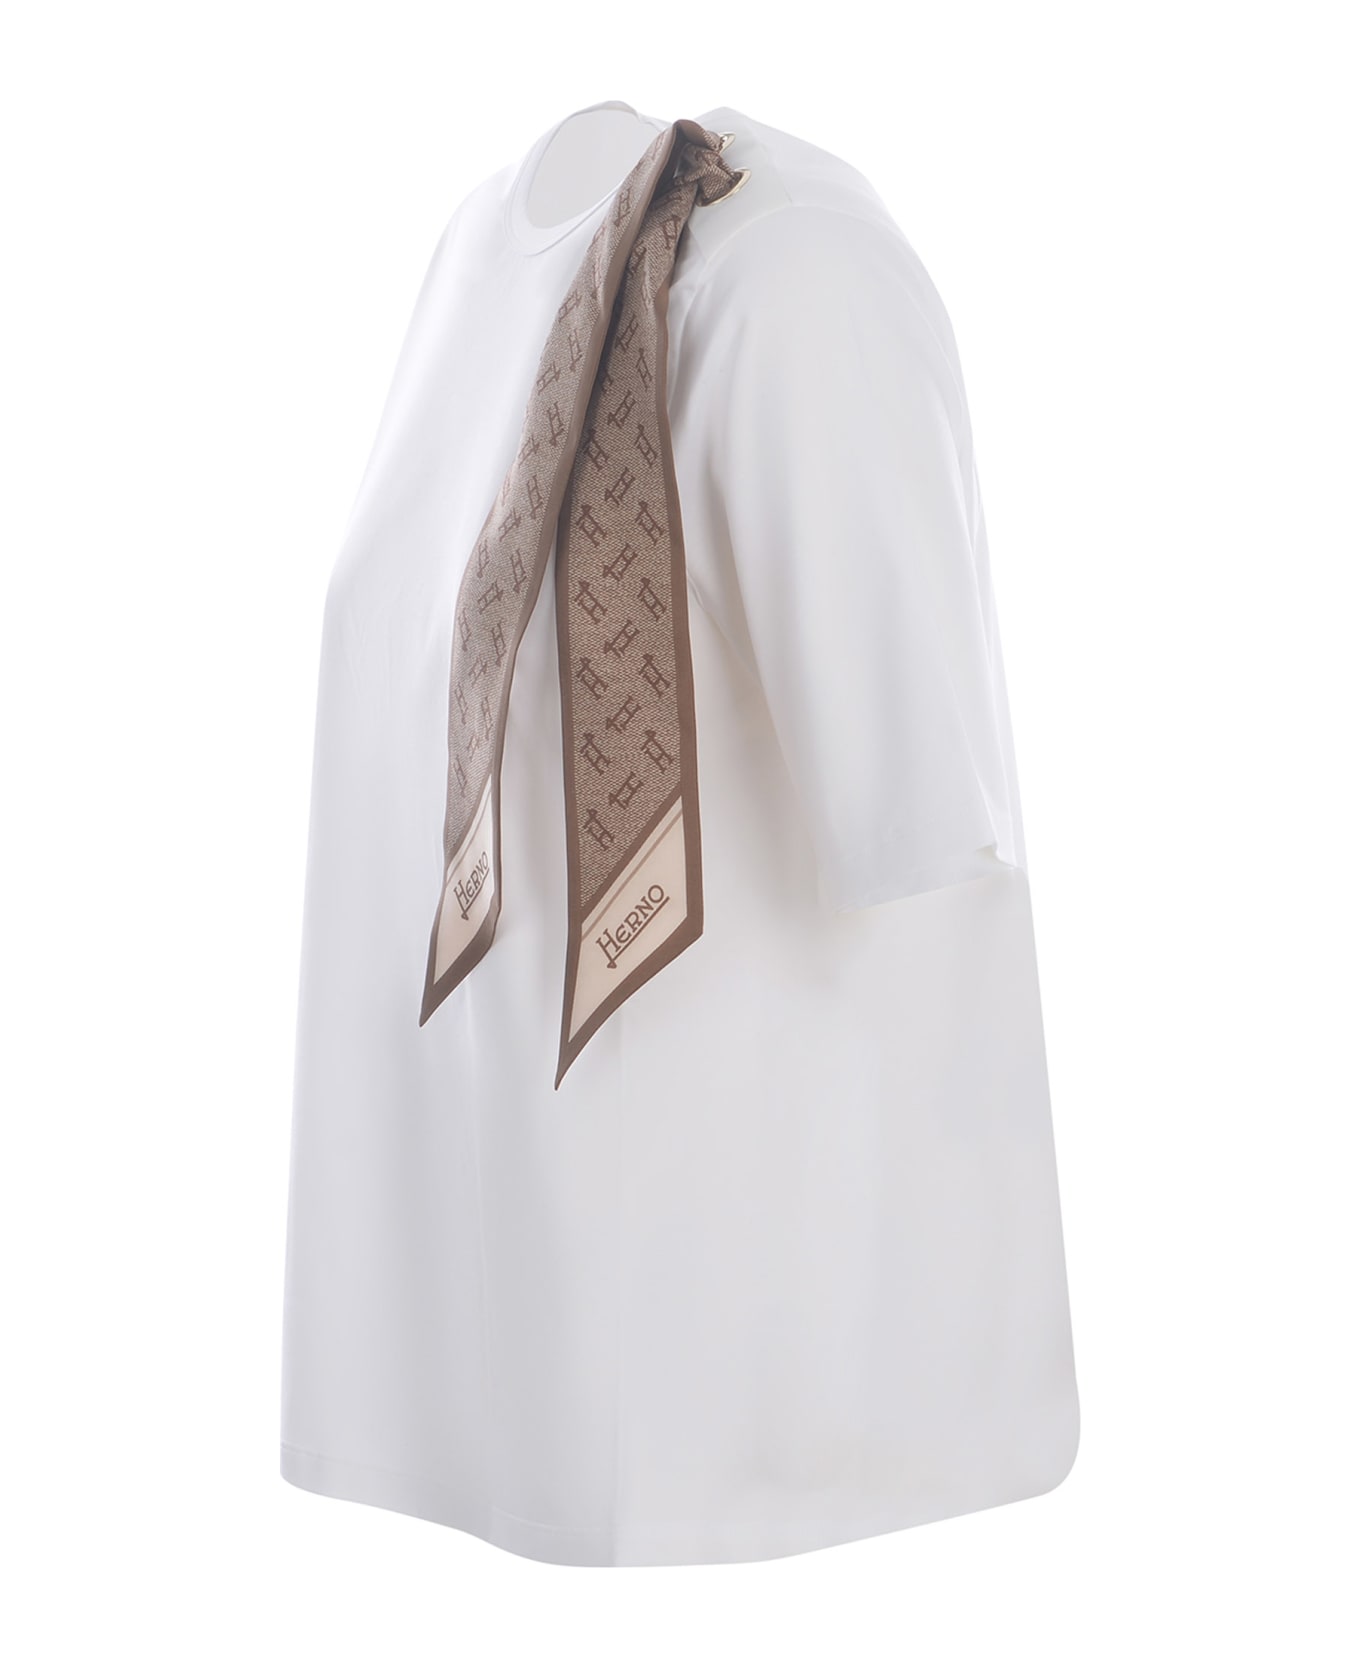 Herno T-shirt Herno "foulard" Made Of Cotton Jersey - Bianco